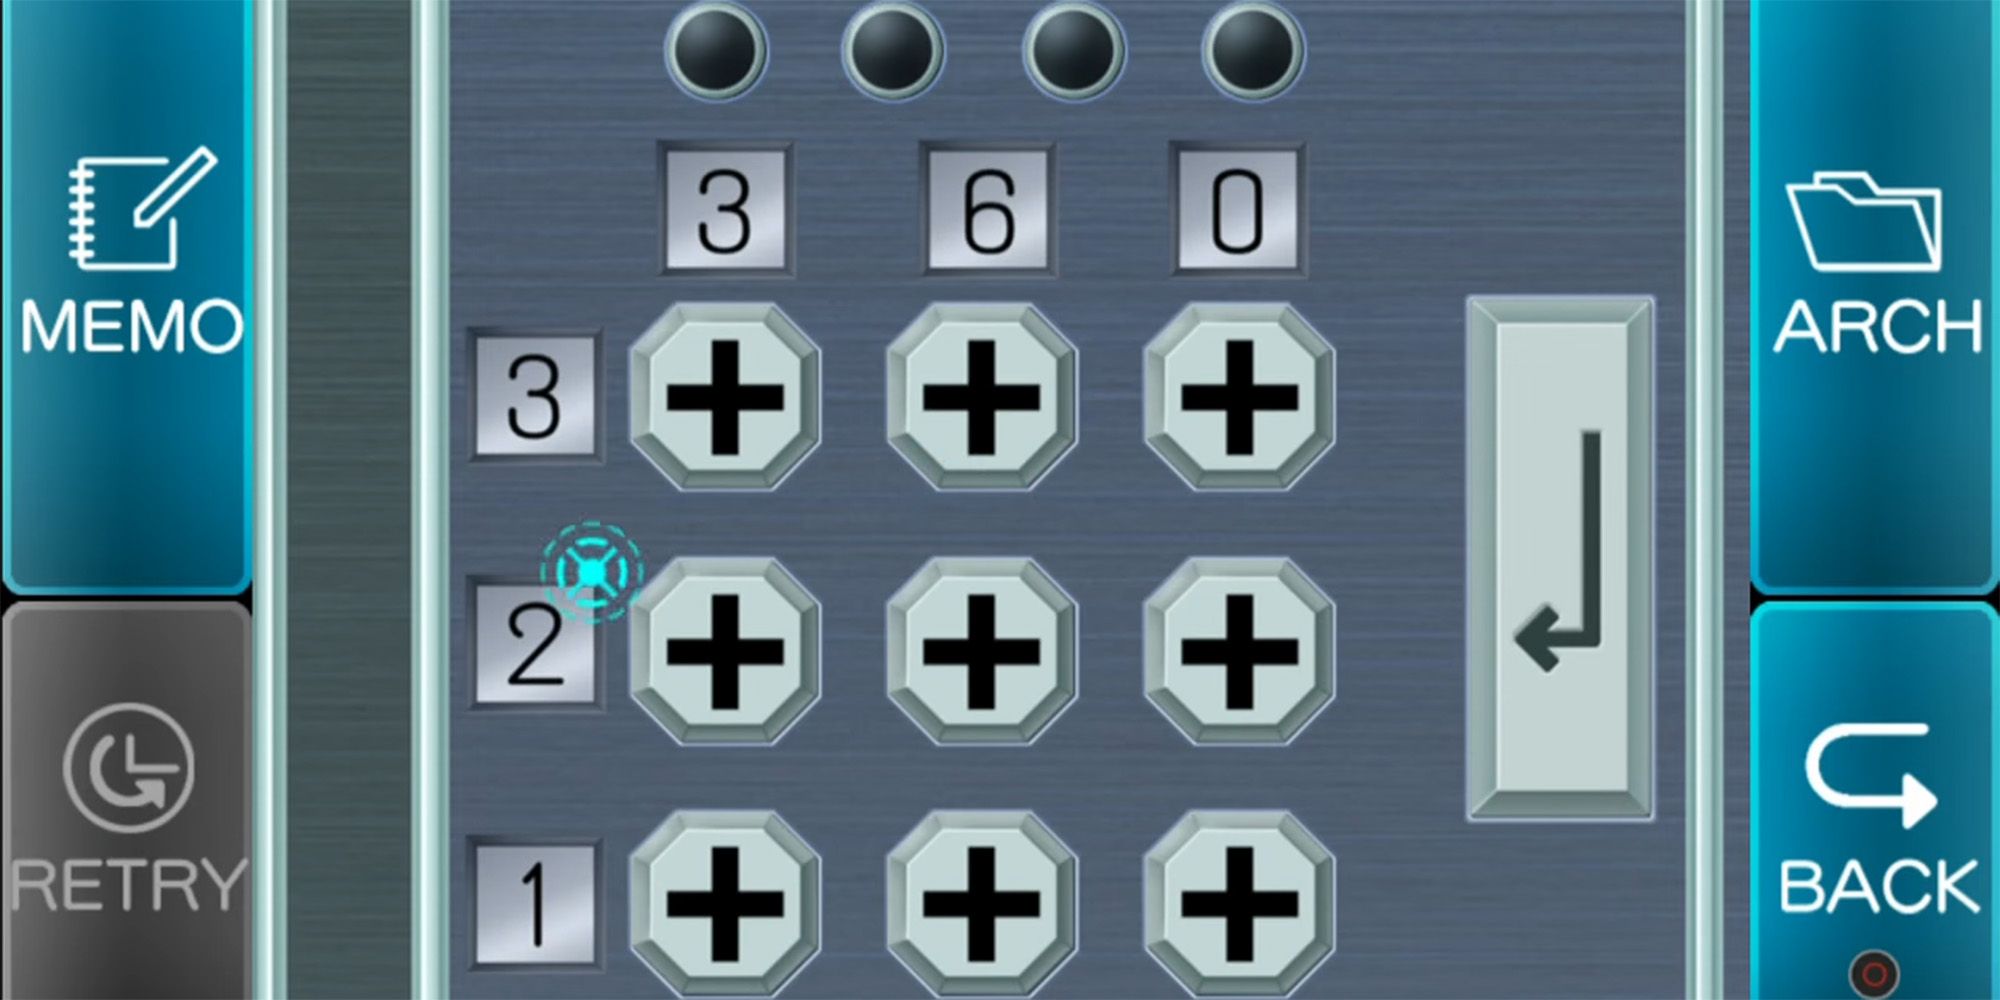 crew quarters locker keypad adding row and column number to enter digit